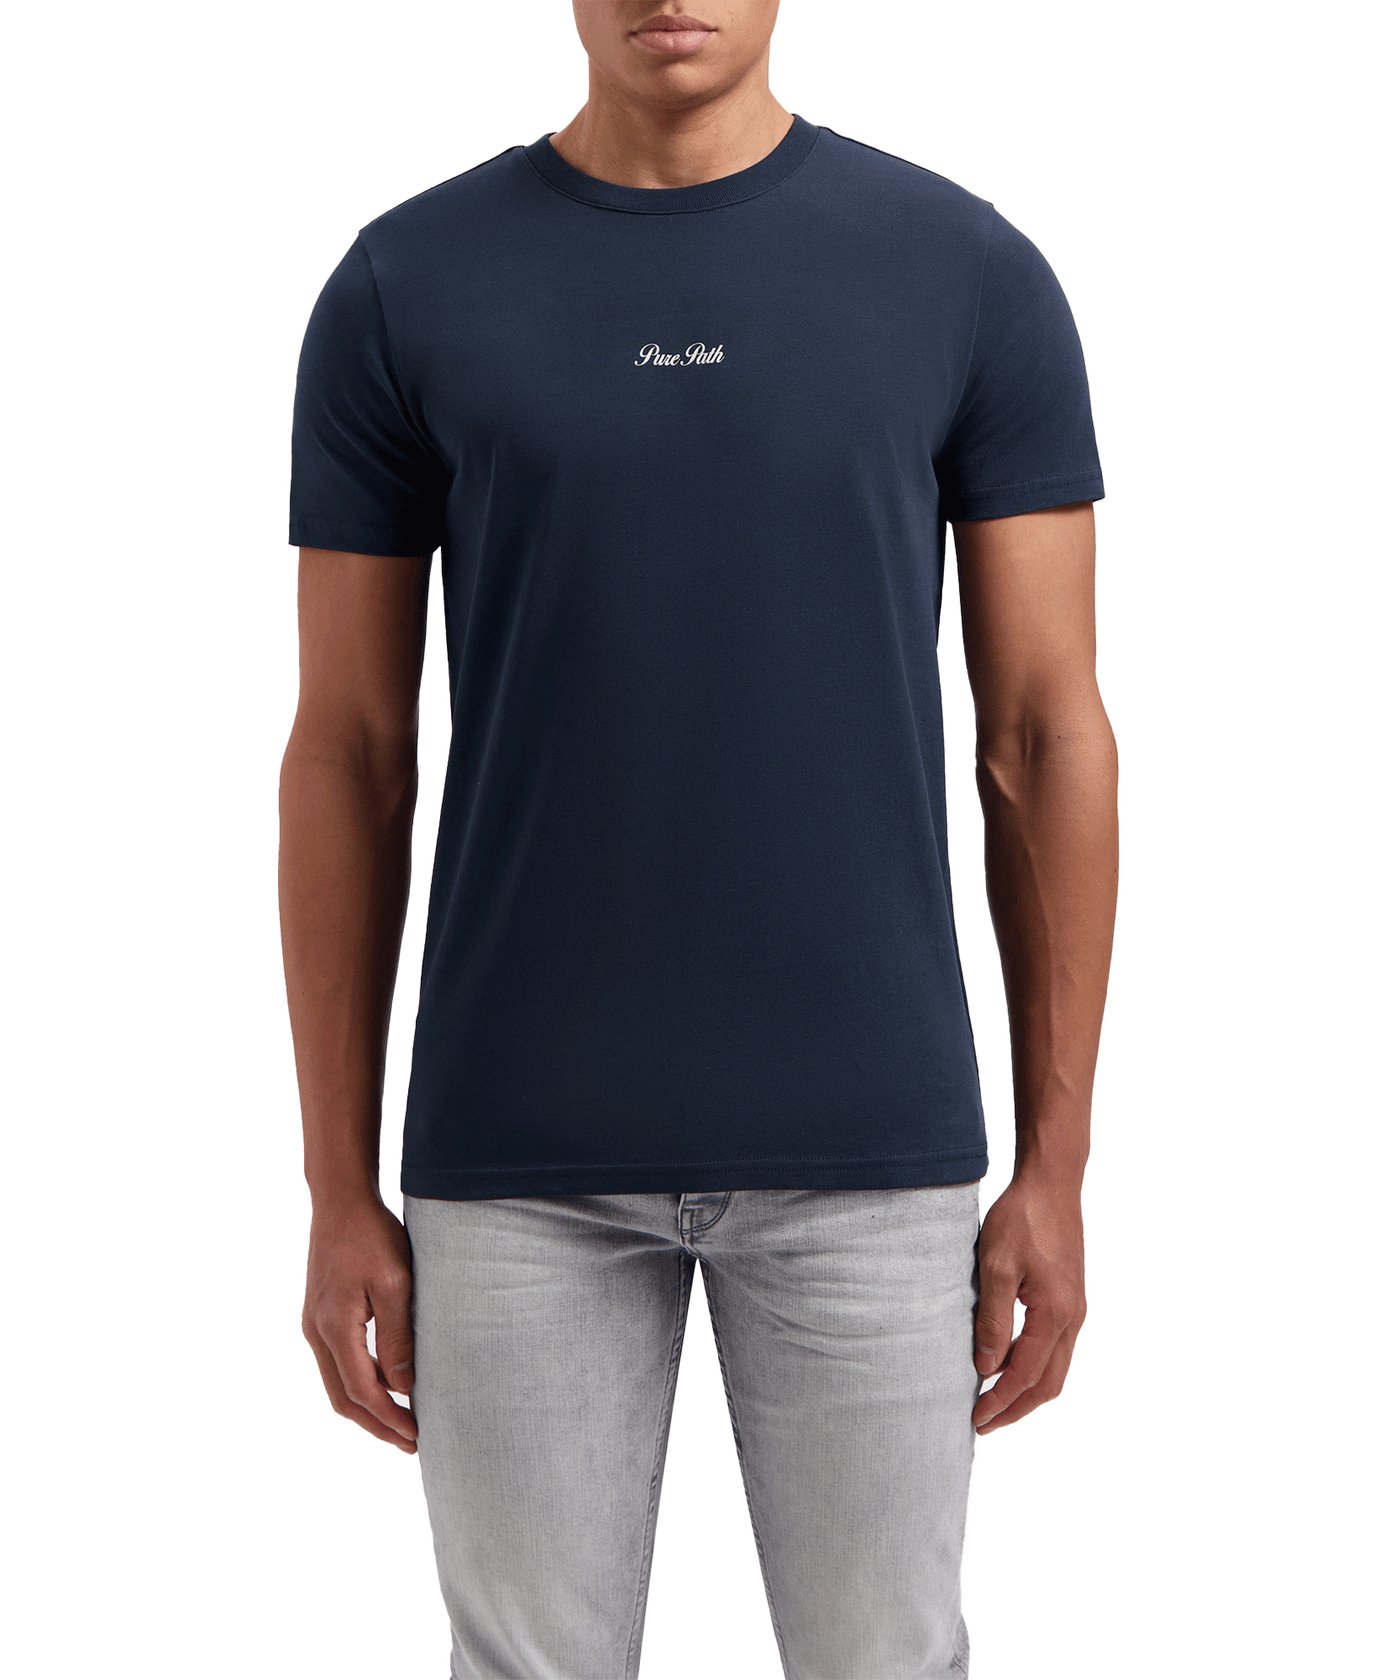 Pure Path - 24010106 - Crewneck T-shirt - Navy